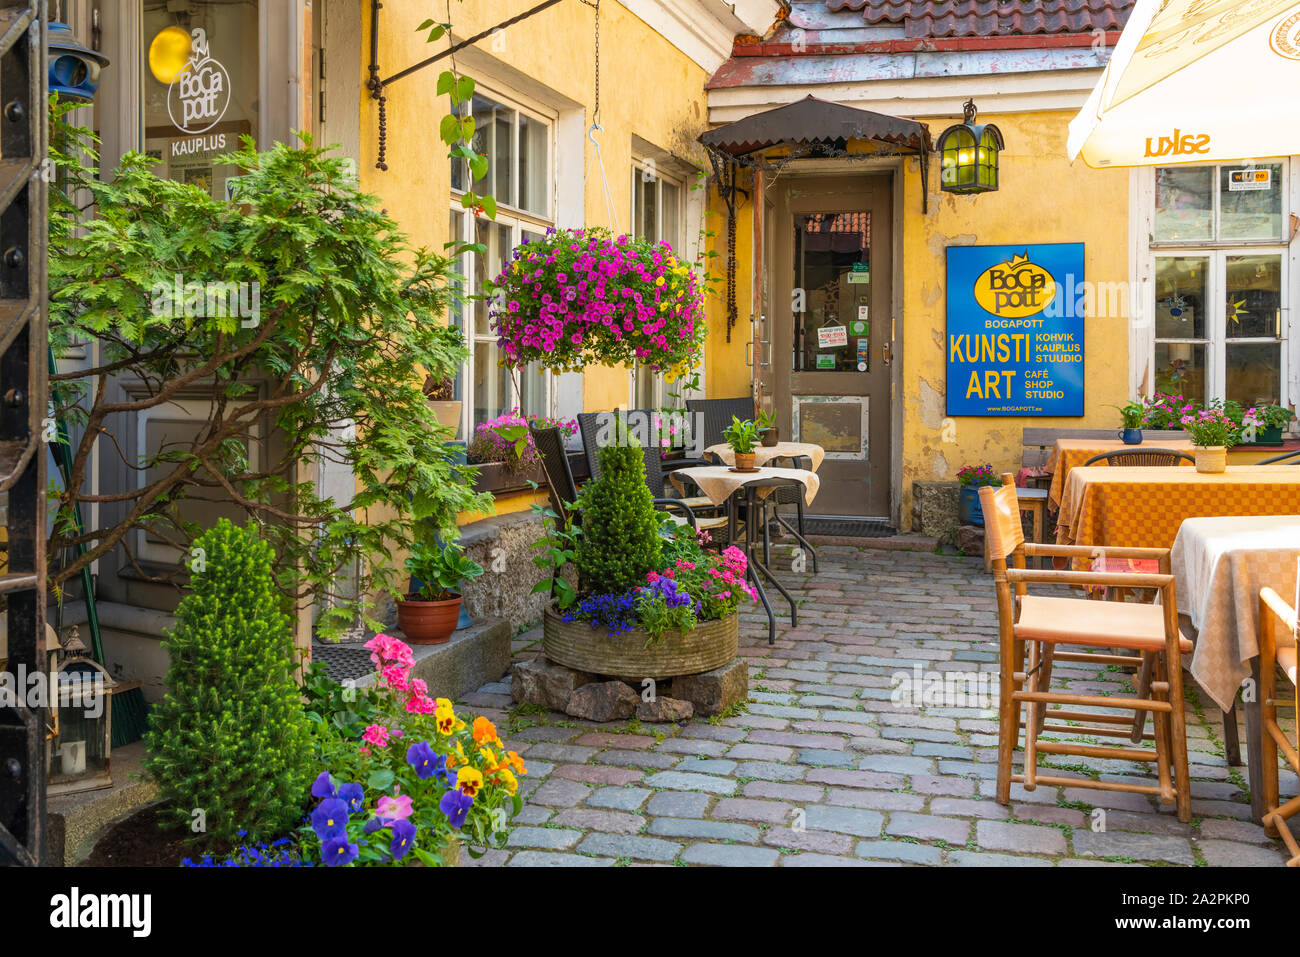 An outdoor restaurant and garden in Tallinn, Estonia. Stock Photo